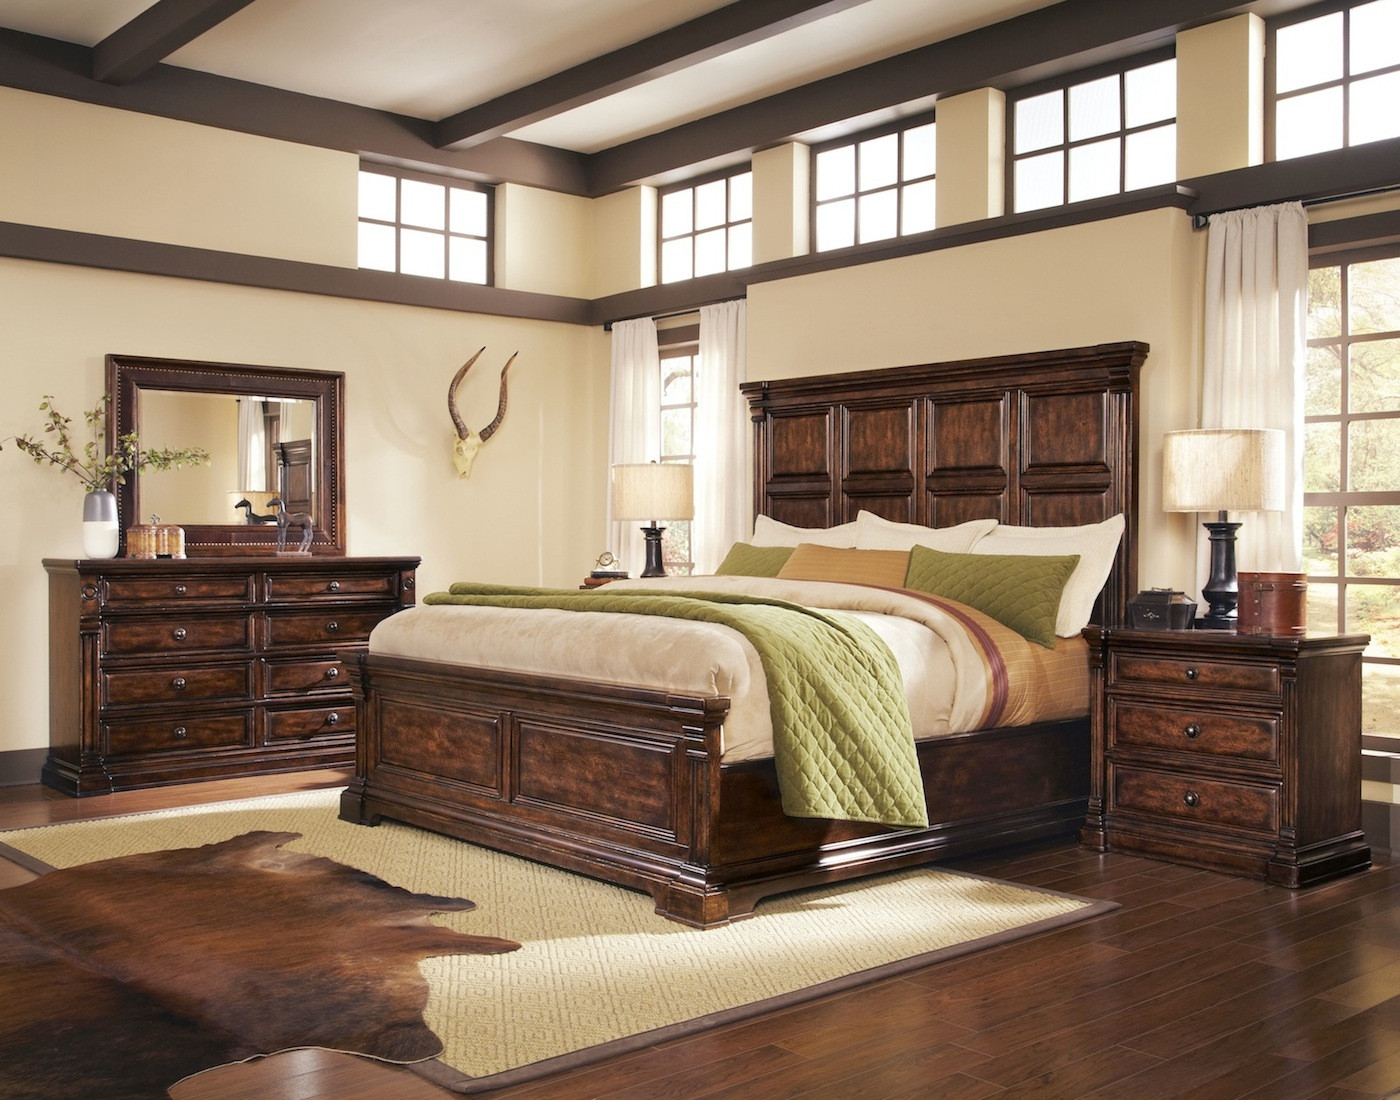 Rustic Bedroom Set
 Whiskey Oak Rustic Inspired Wooden Panel Bedroom Set